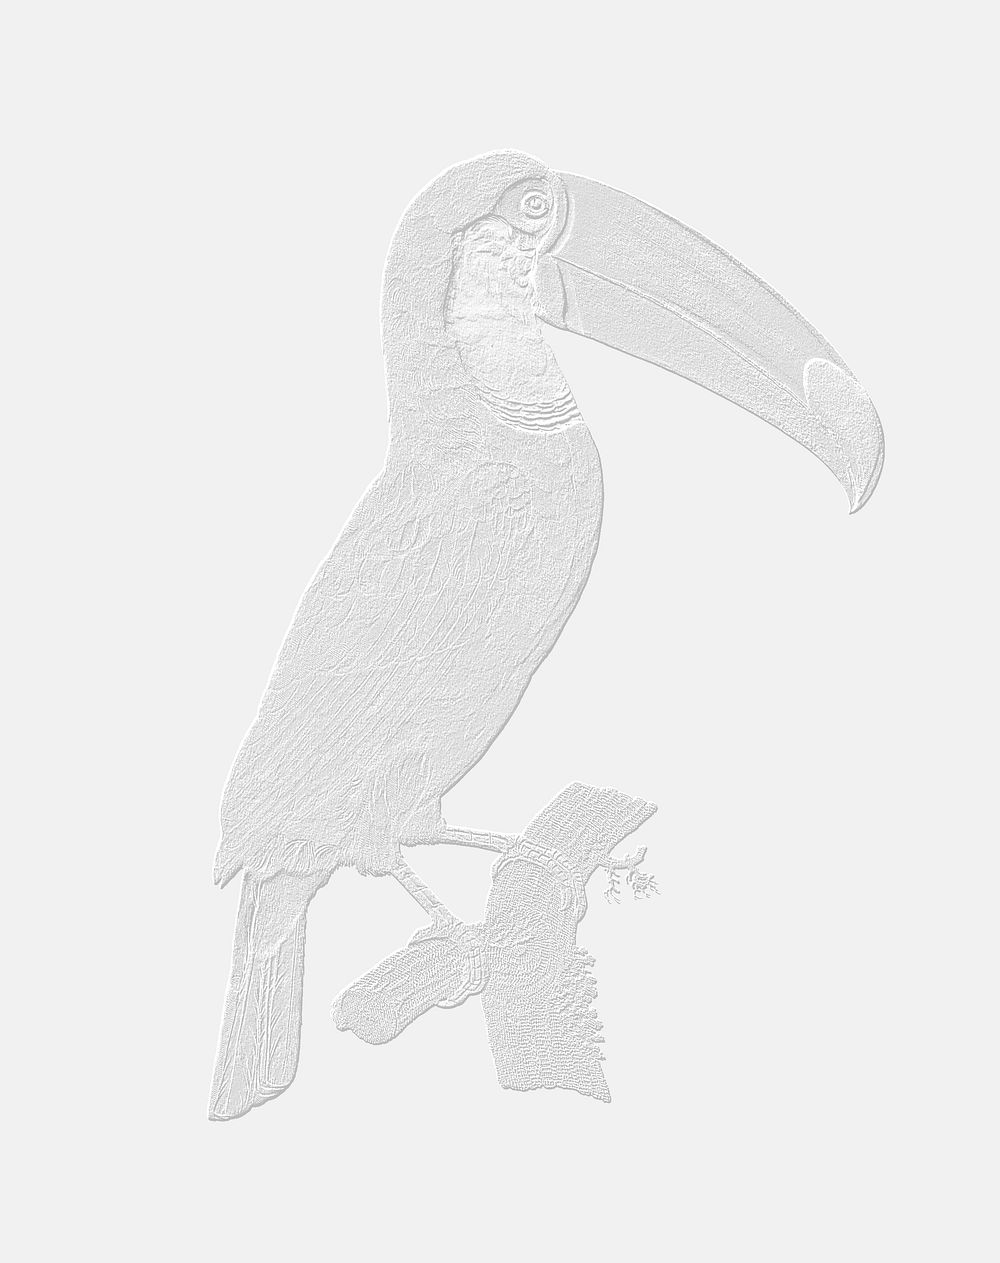 Embossed Toco toucan vintage illustration, remix from original artwork.